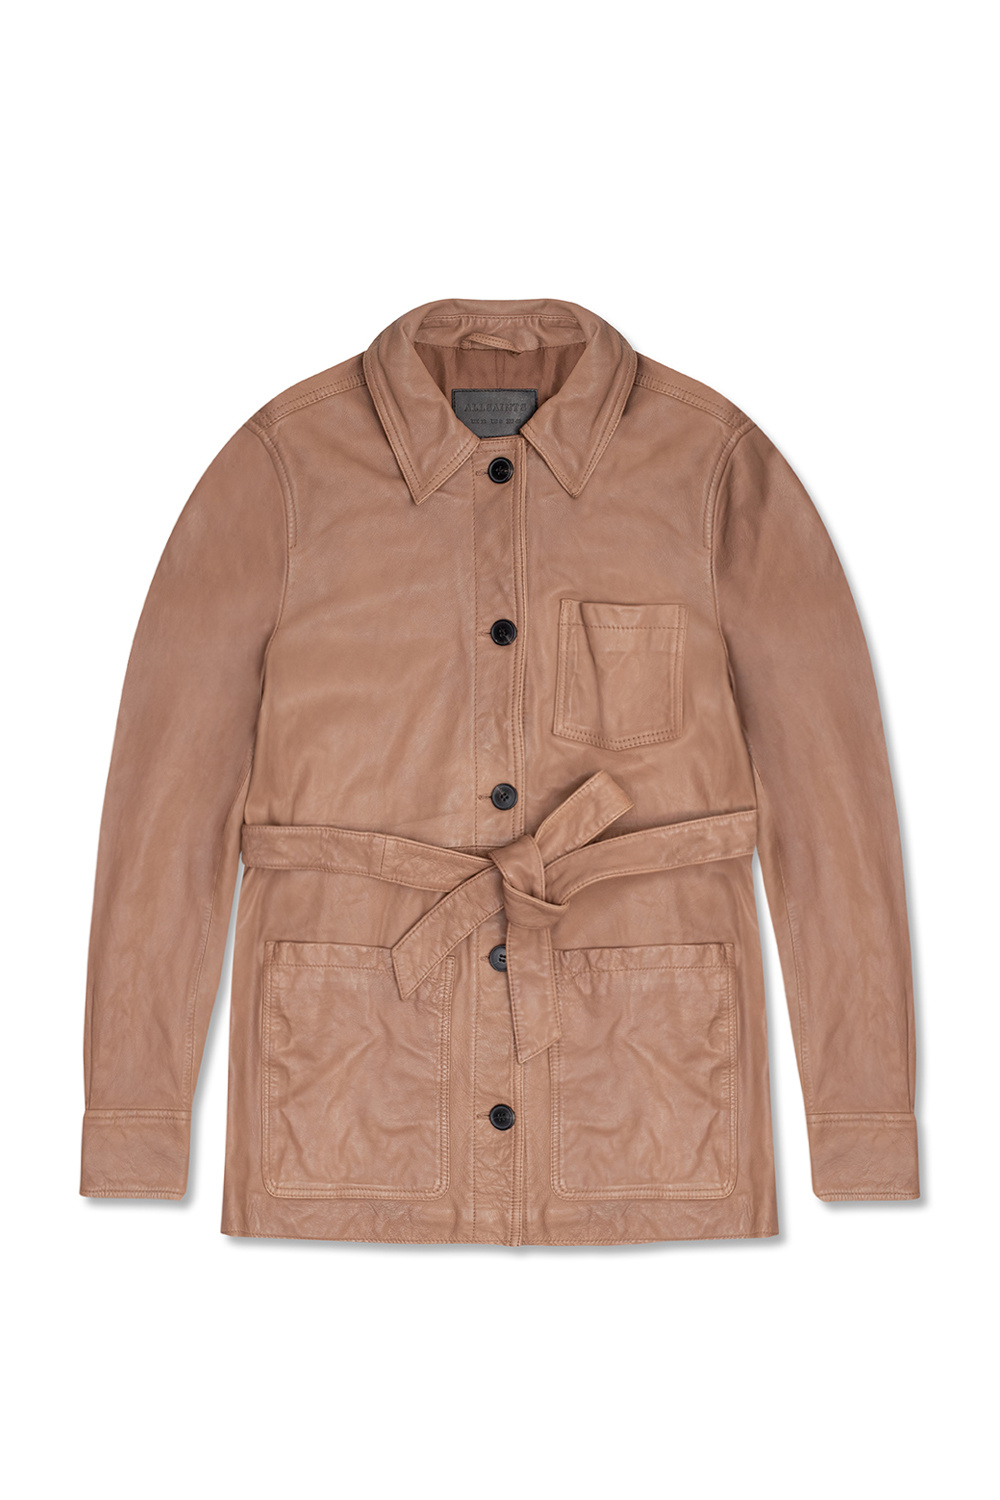 AllSaints ‘Eve’ leather jacket